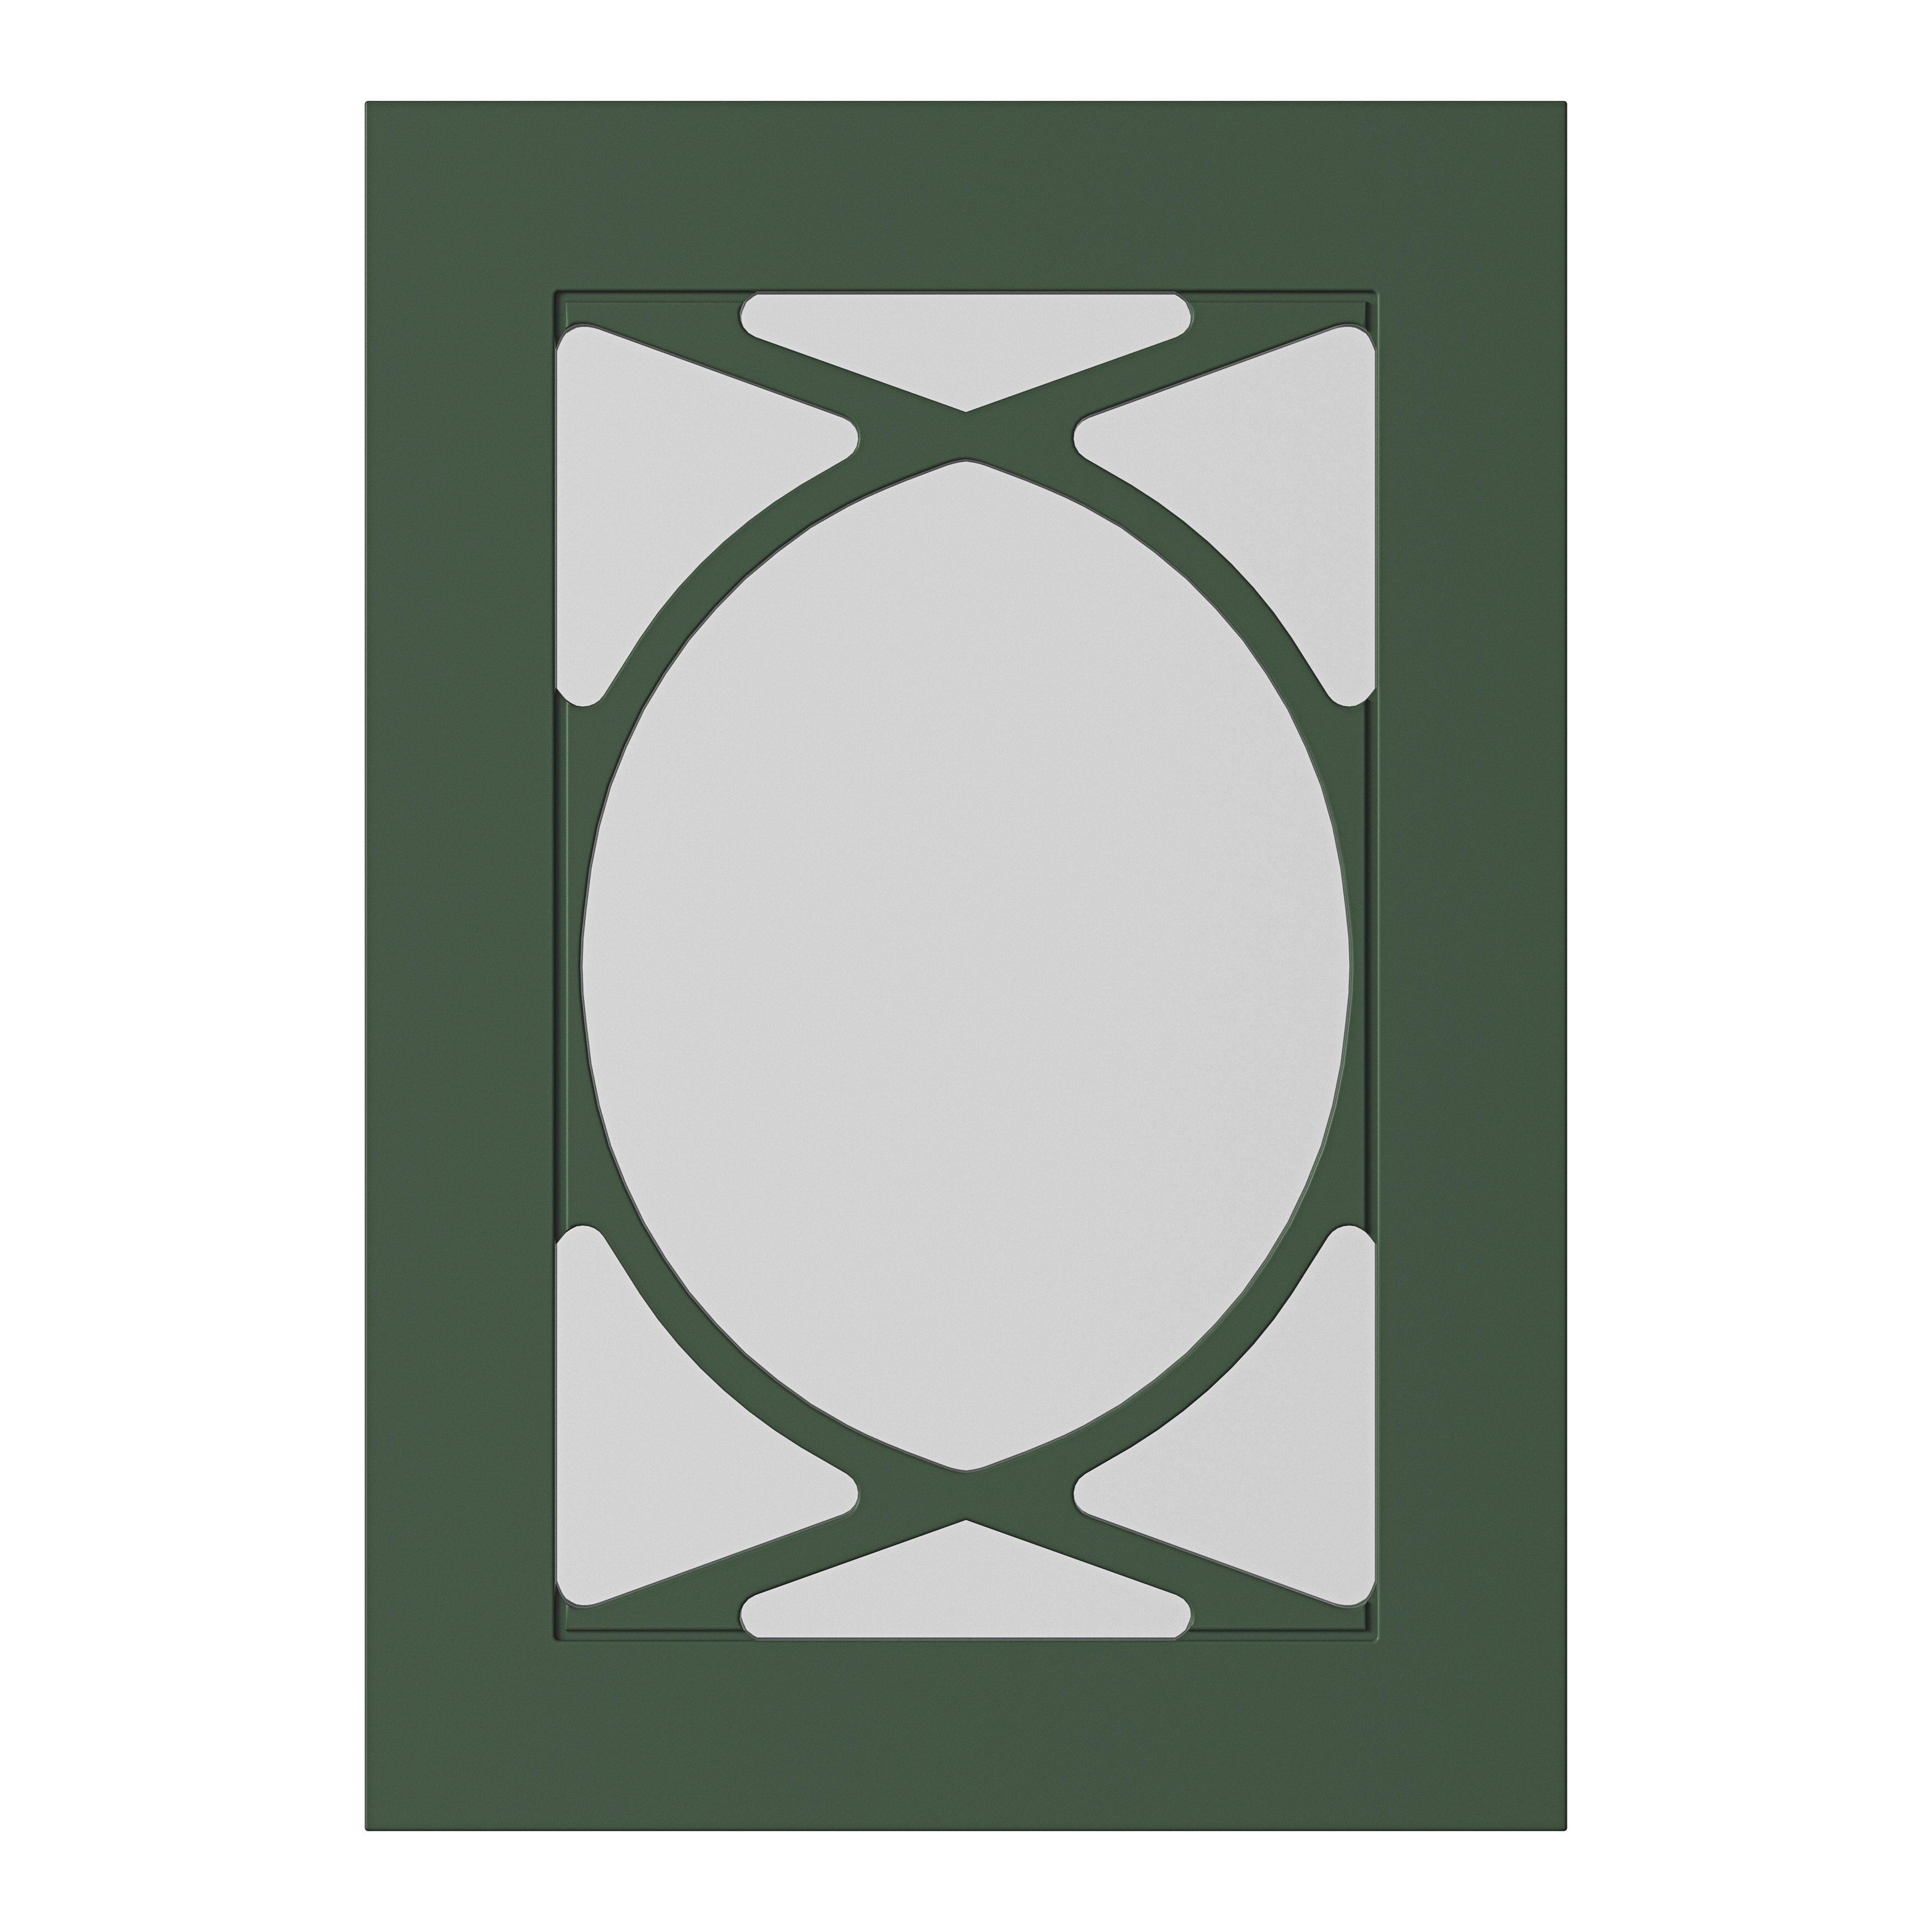 GoodHome Artemisia Matt dark green shaker Glazed Cabinet door (W)500mm (H)715mm (T)18mm